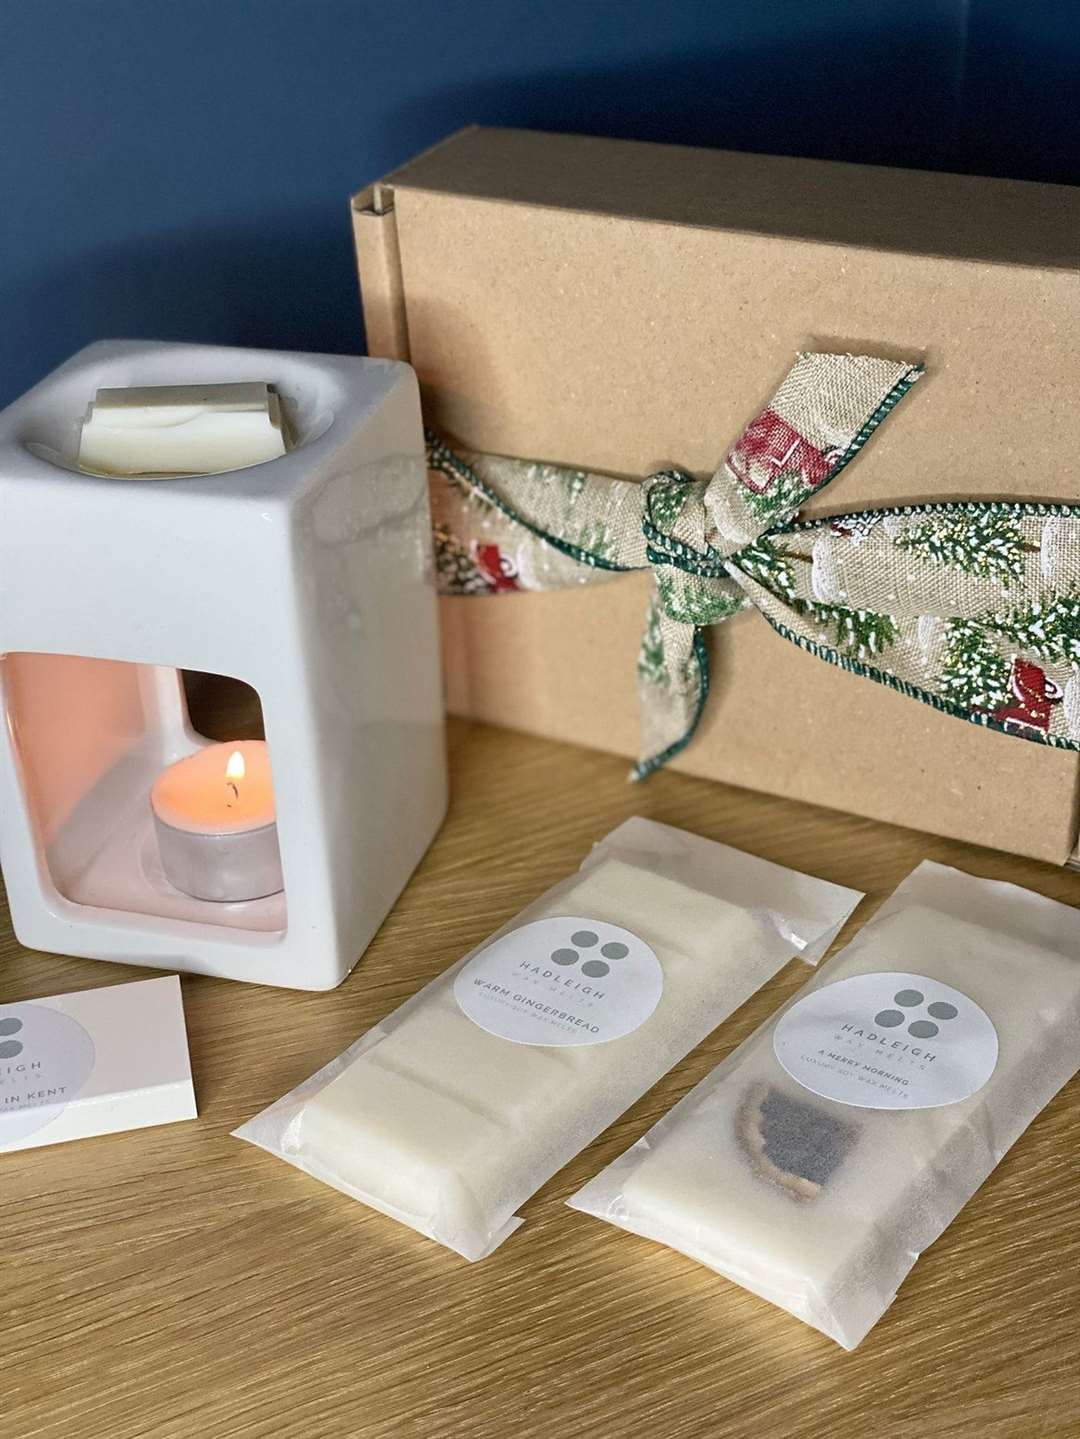 A Hadleigh Wax Melts Christmas gift set